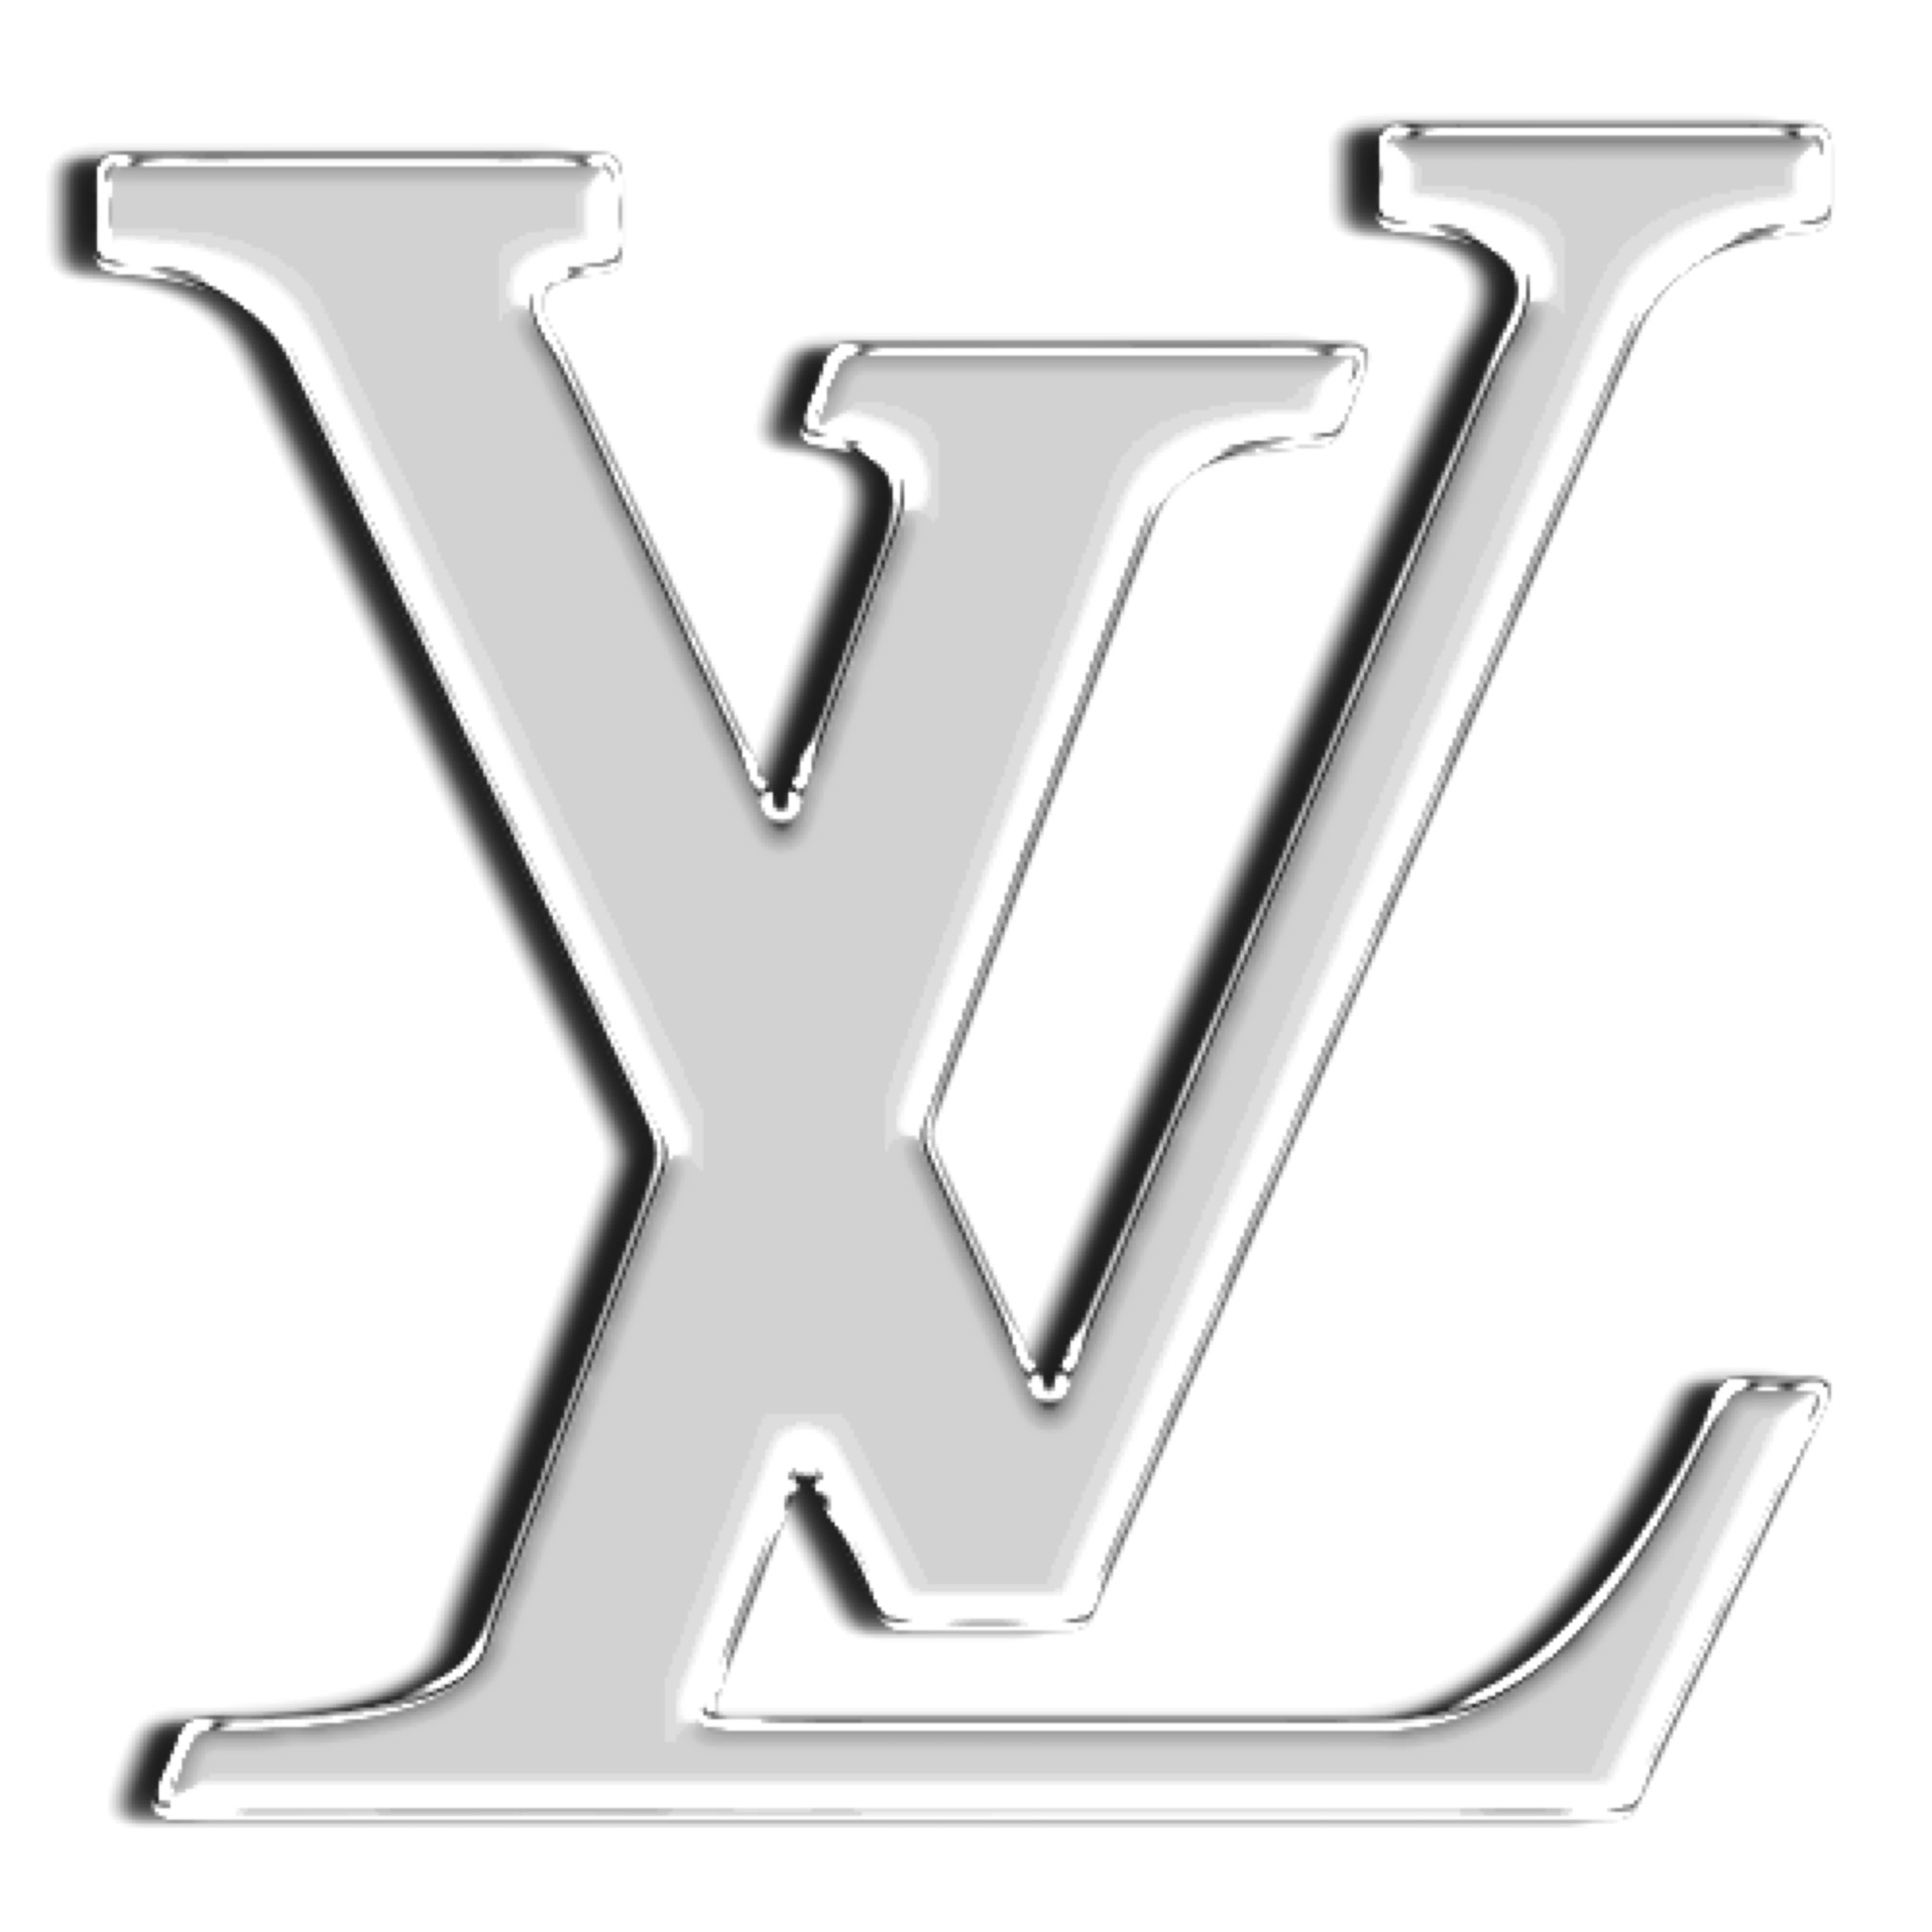 Louis Vuitton Logo Monogram by TeVesMuyNerviosa on DeviantArt